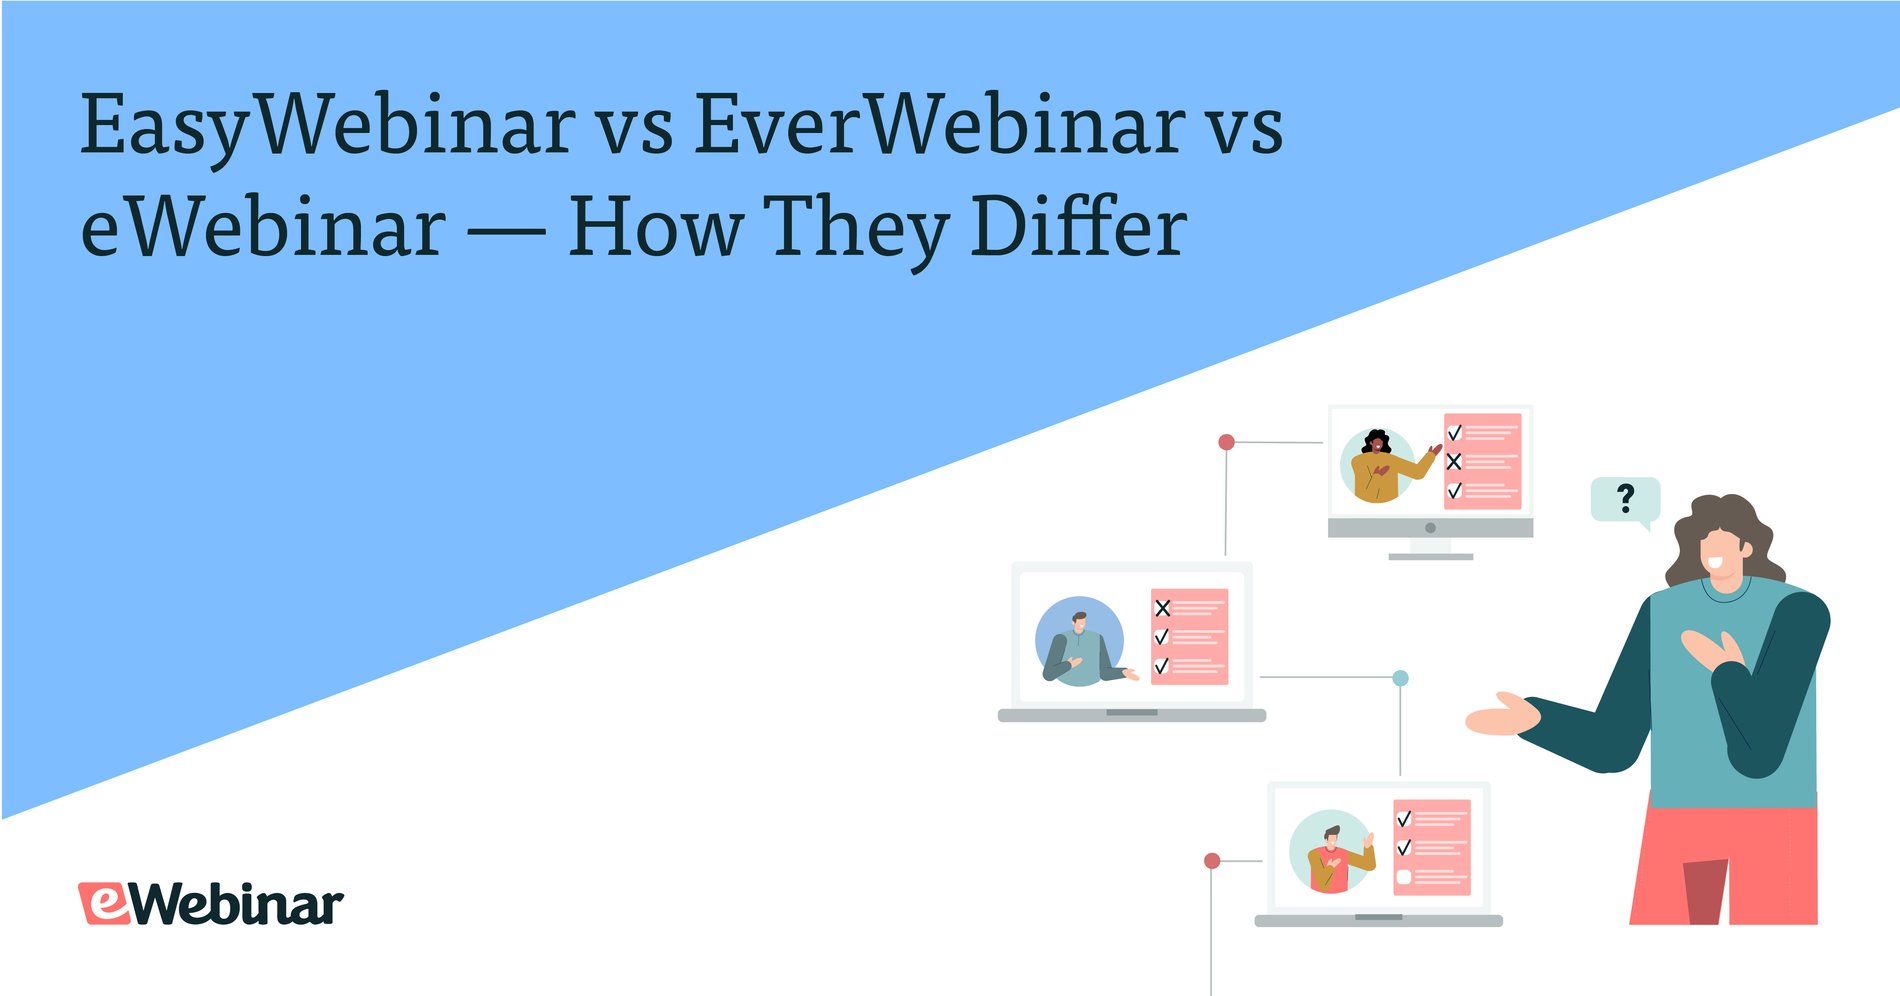 EasyWebinar vs EverWebinar vs eWebinar — How They Differ